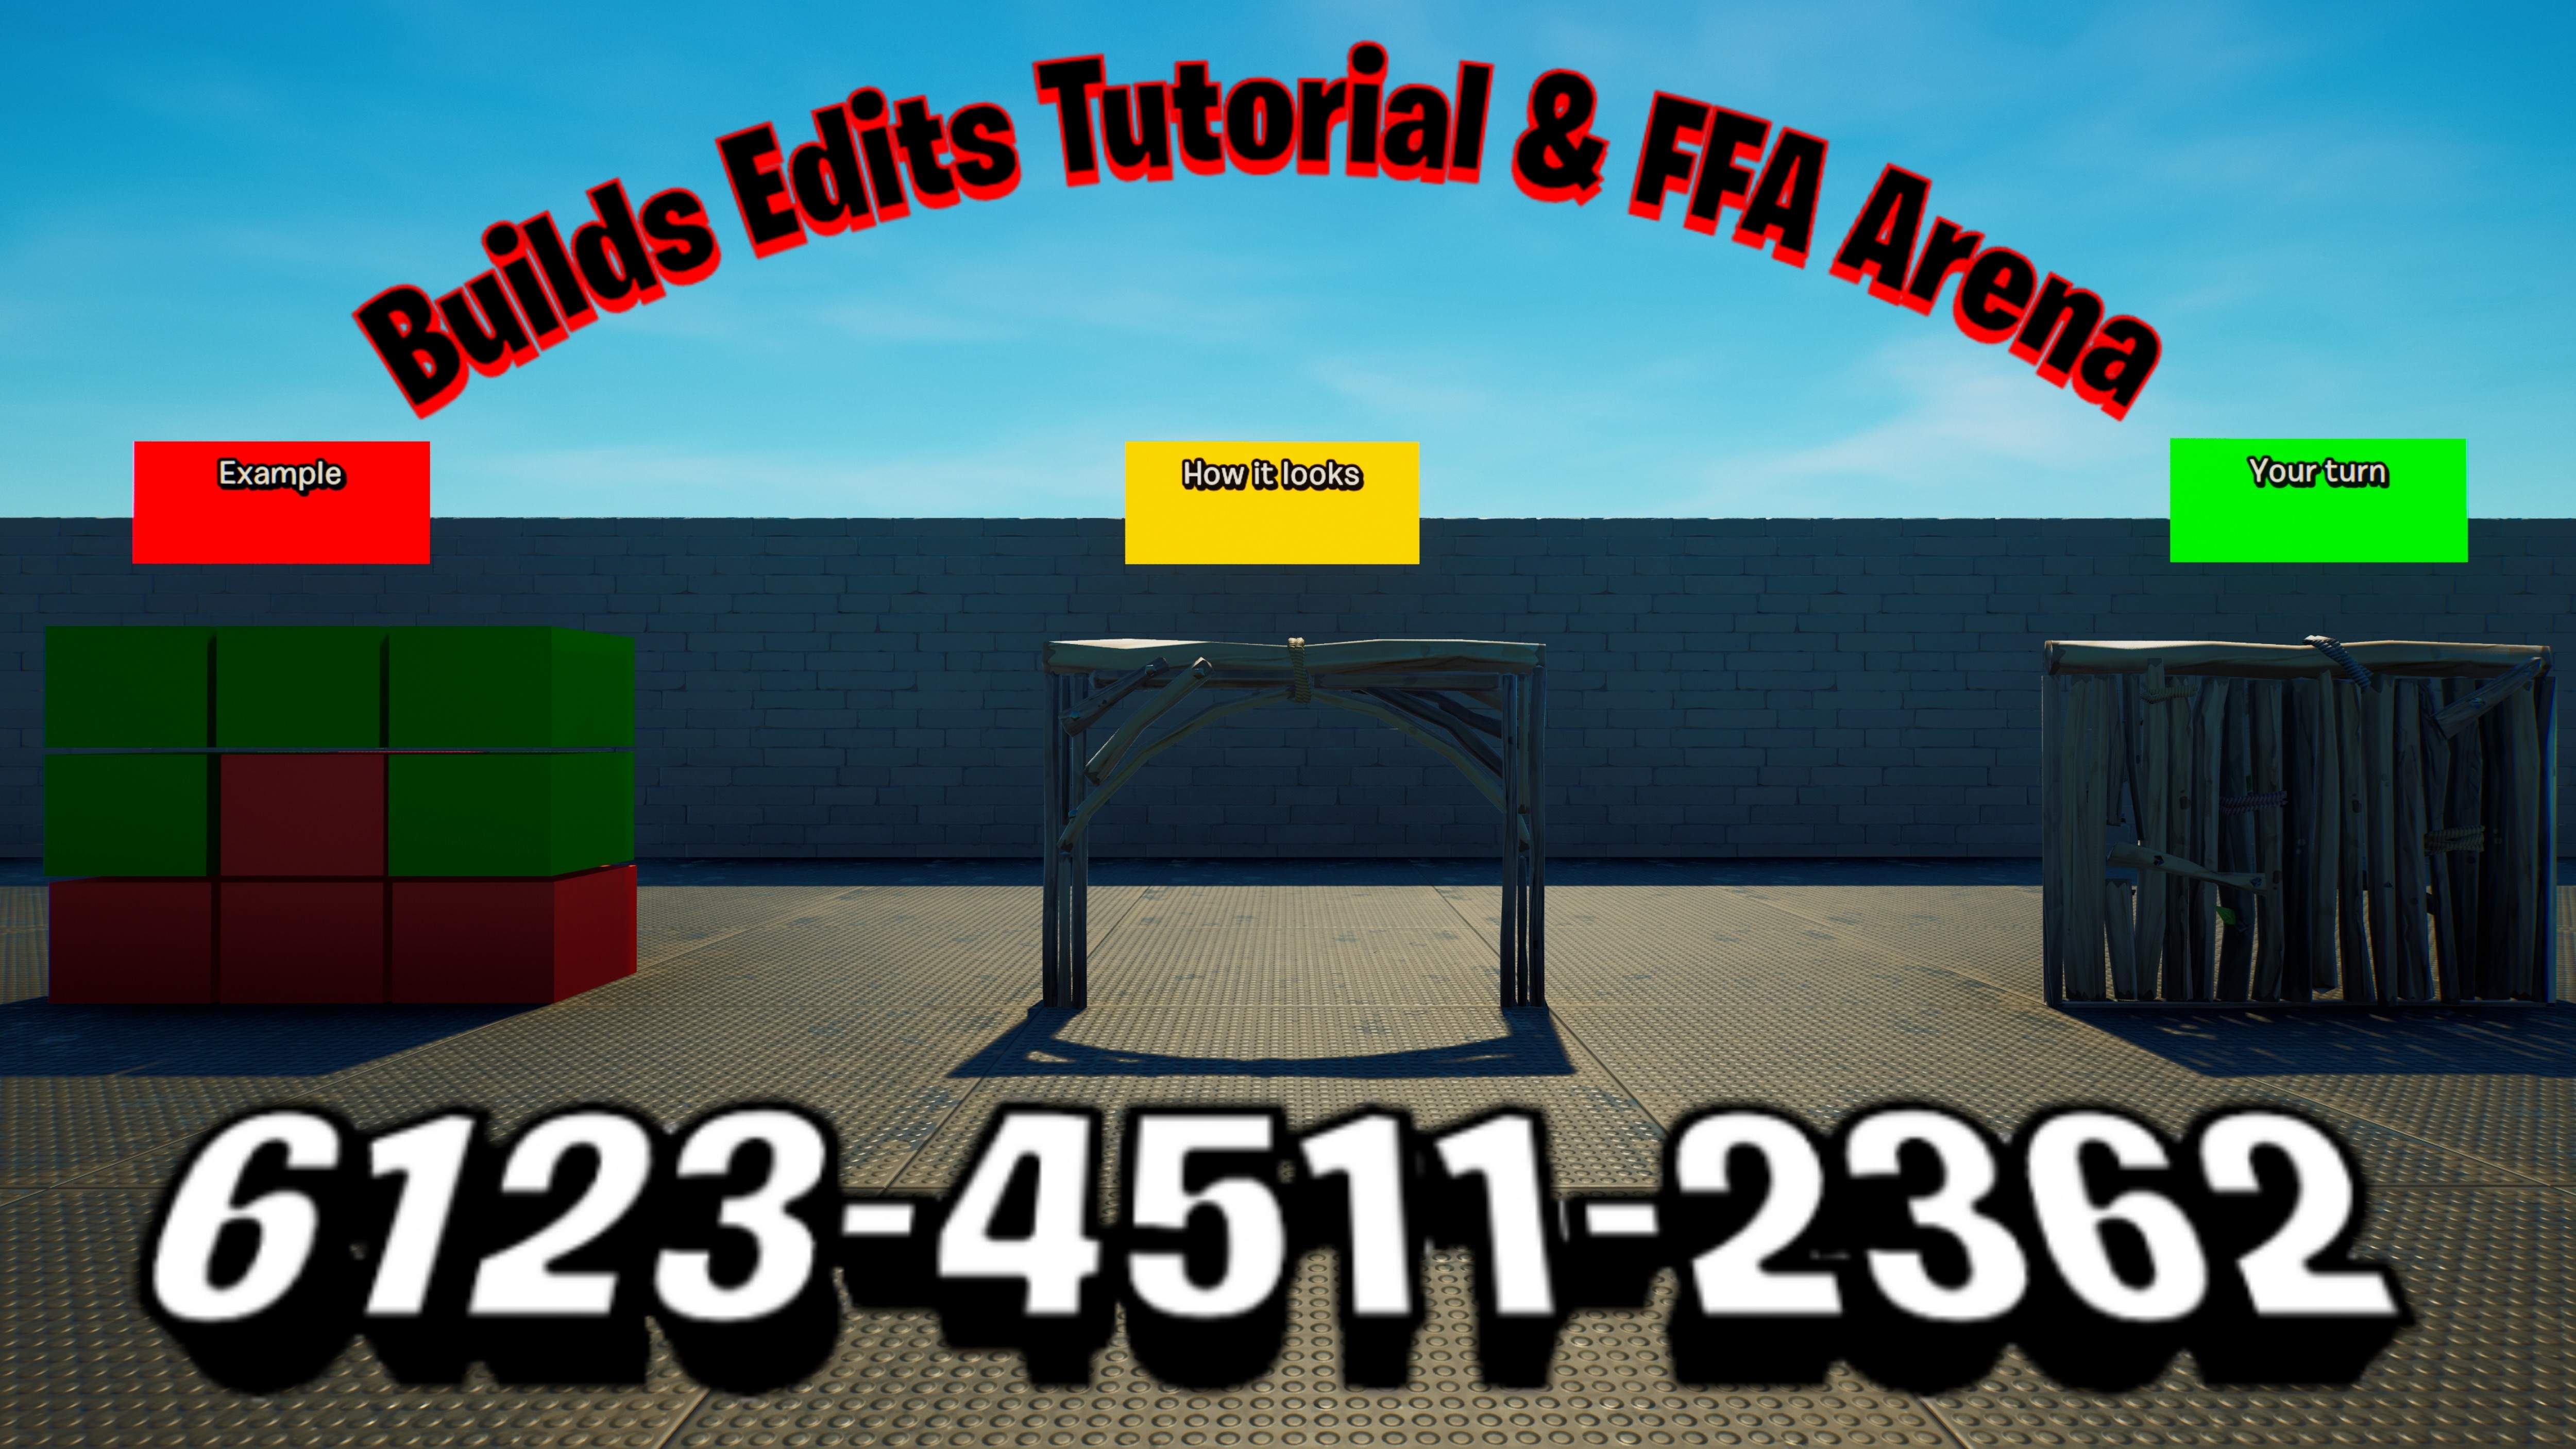 Build Edits Tutorial & FFA Arena